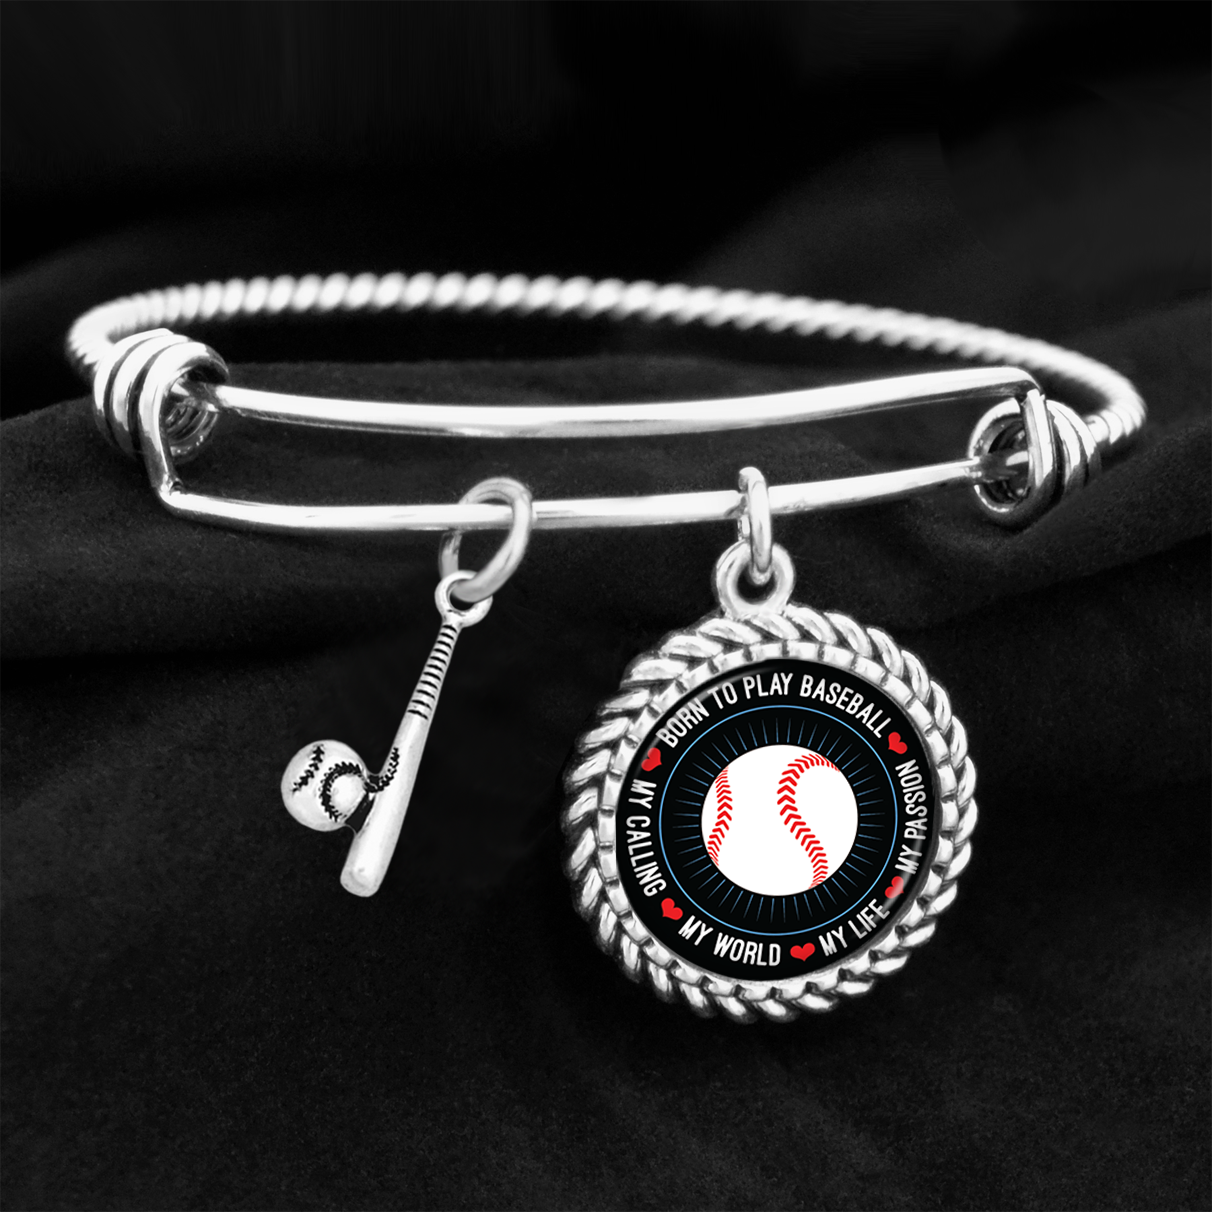 Born To Play Baseball Charm Bracelet